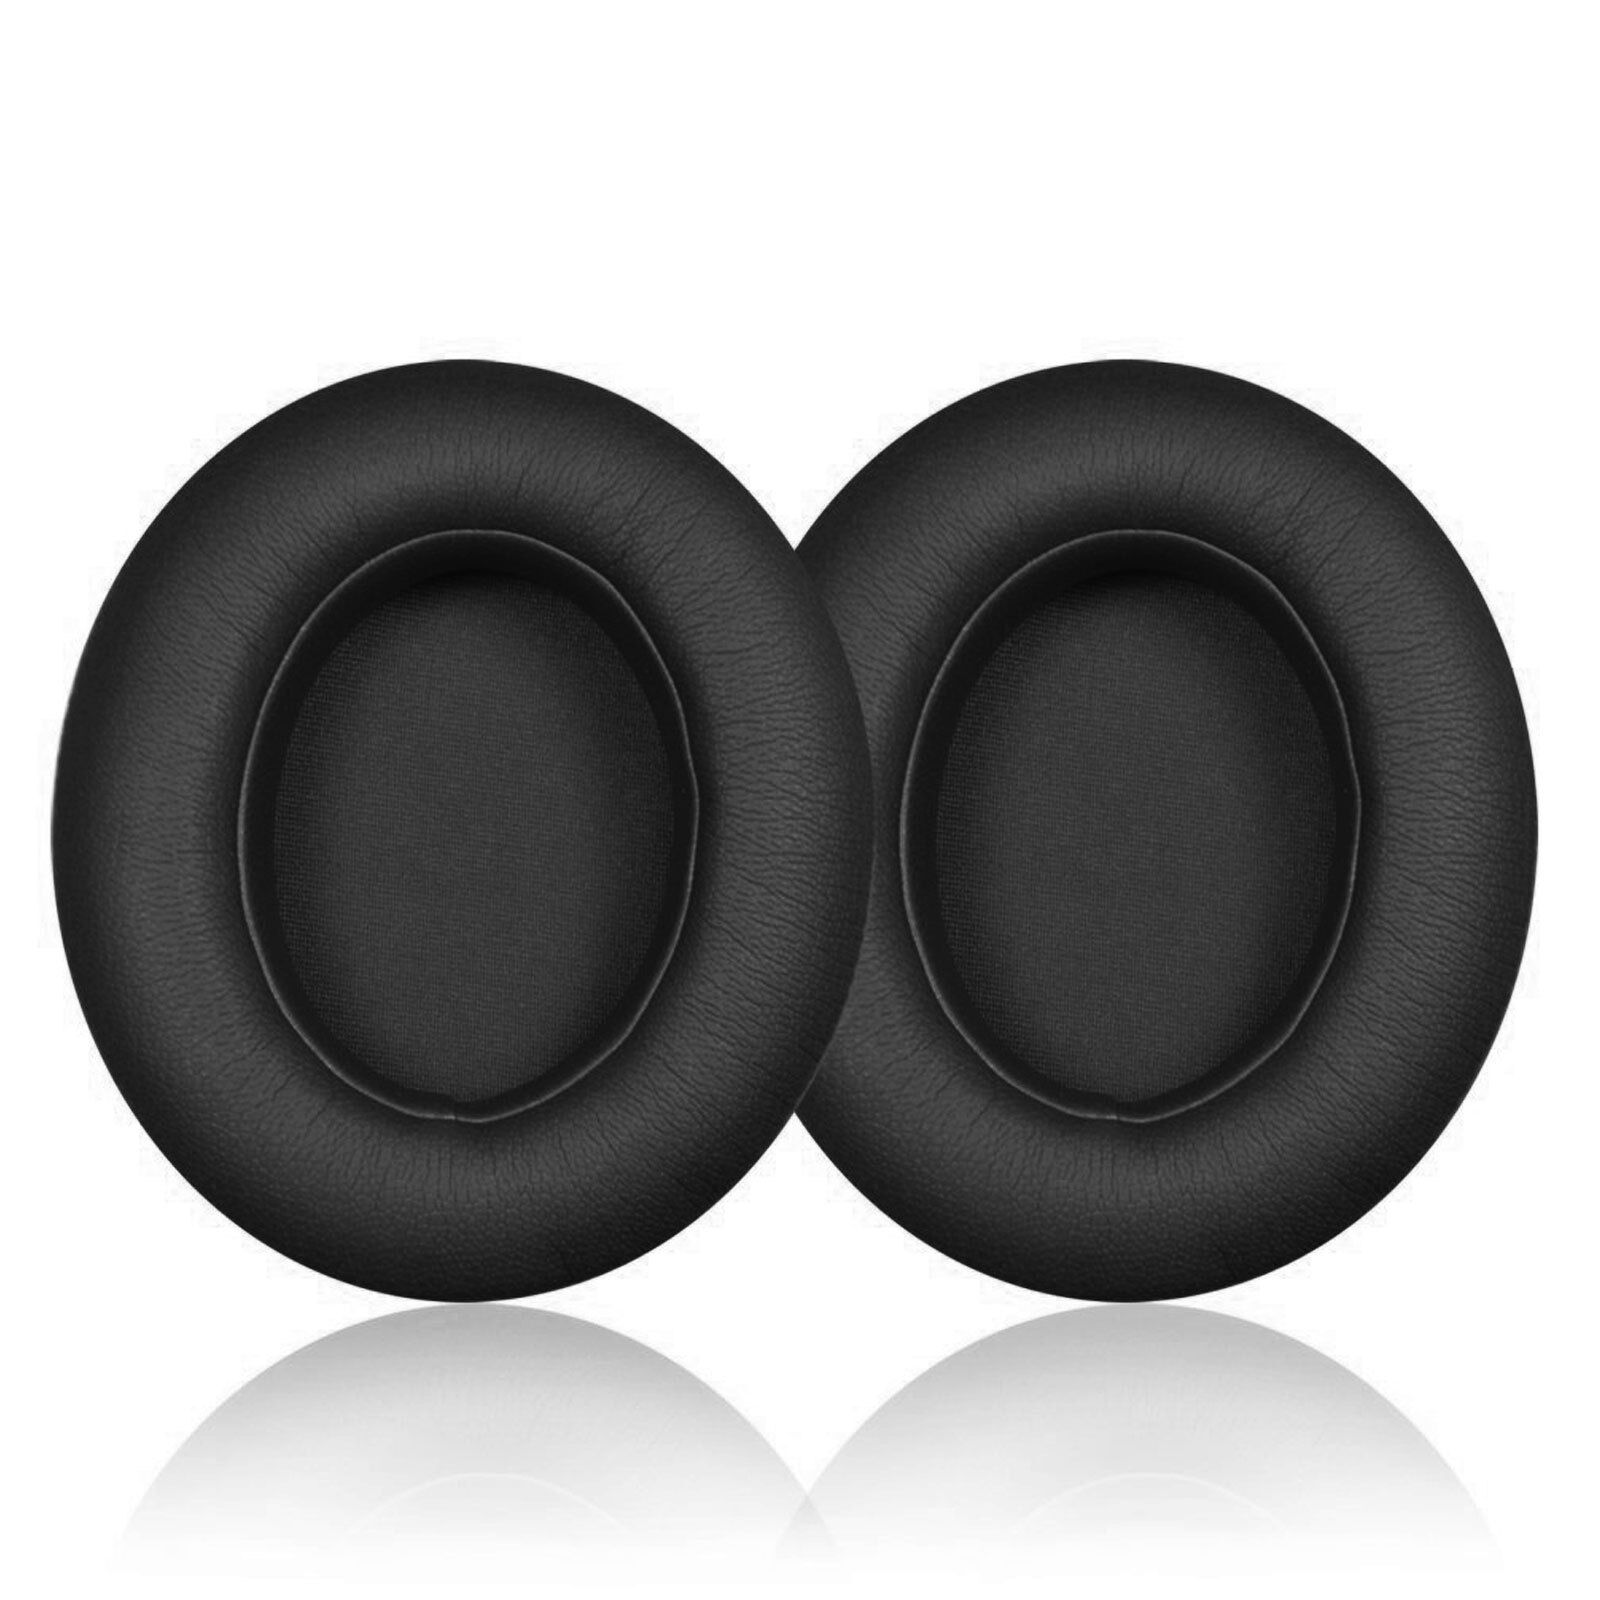 2 Pack Replacement Ear Pads Cushion for Beats Studio 2.0 / Studio 3.0 Headphones